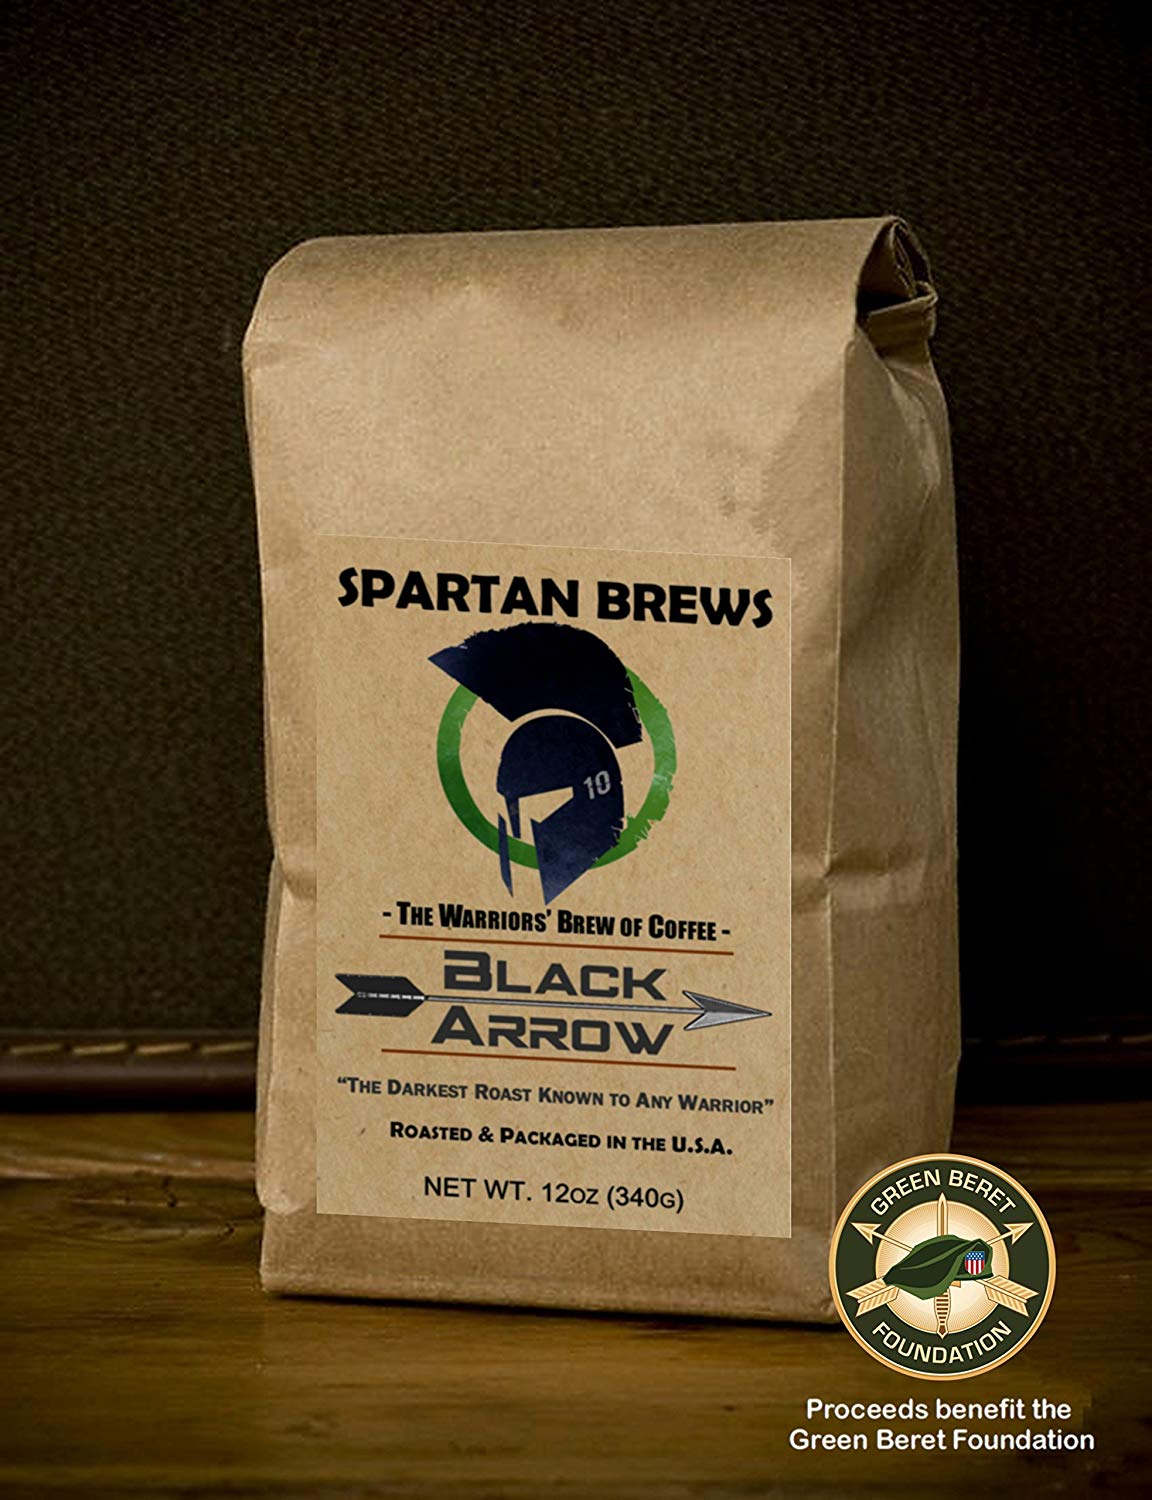 U Shape in a Black Arrow Logo - Amazon.com : BLACK ARROW - The Darkest Roast Ever - by Spartan Brews ...